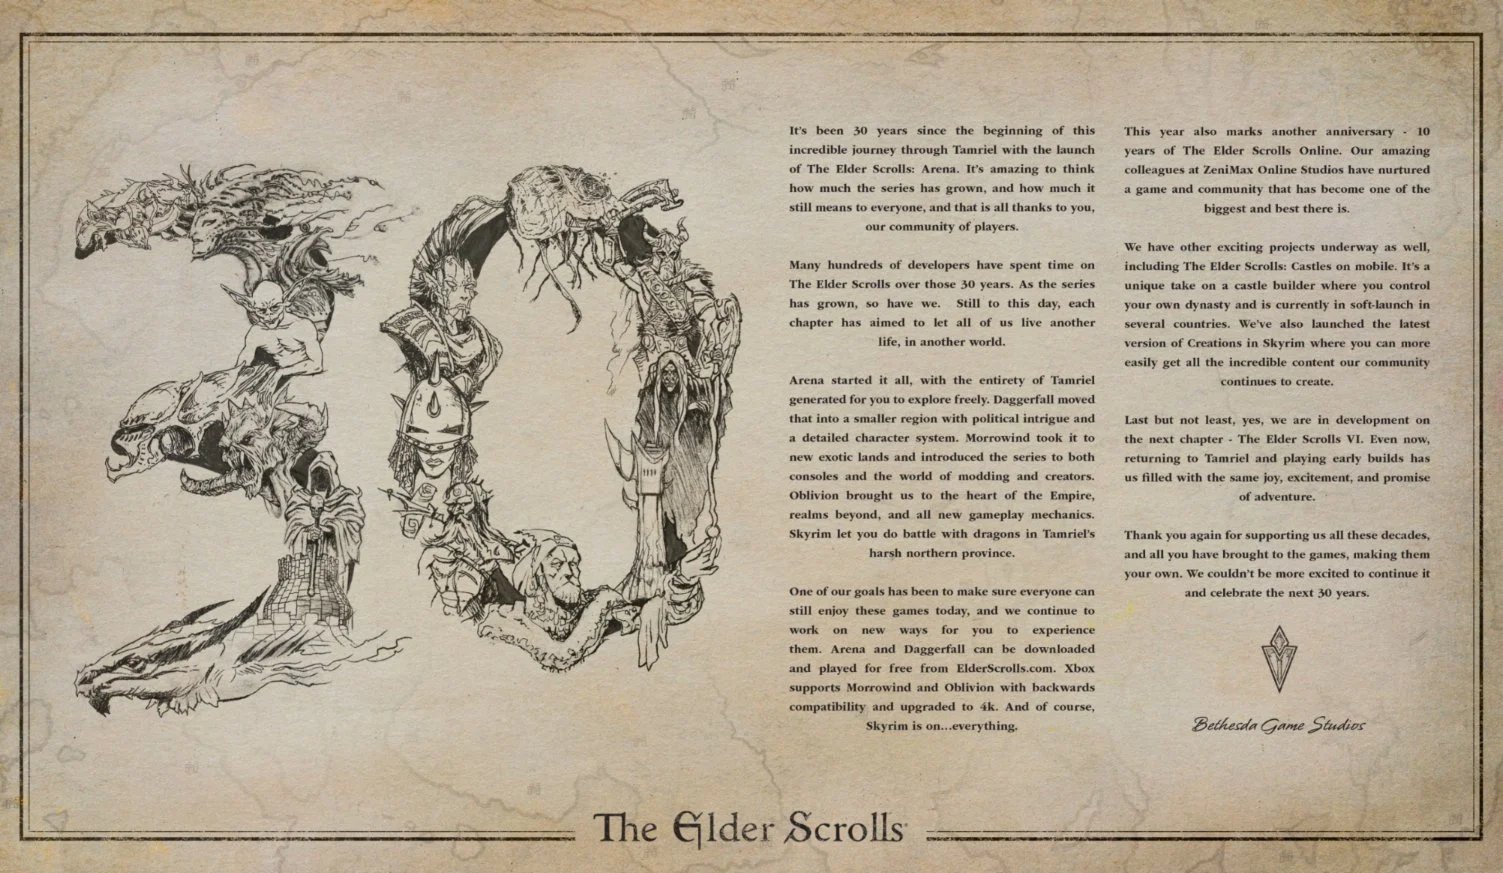 Bethesda поздравила геймеров с 30-летним юбилеем The Elder Scrolls - фото 1